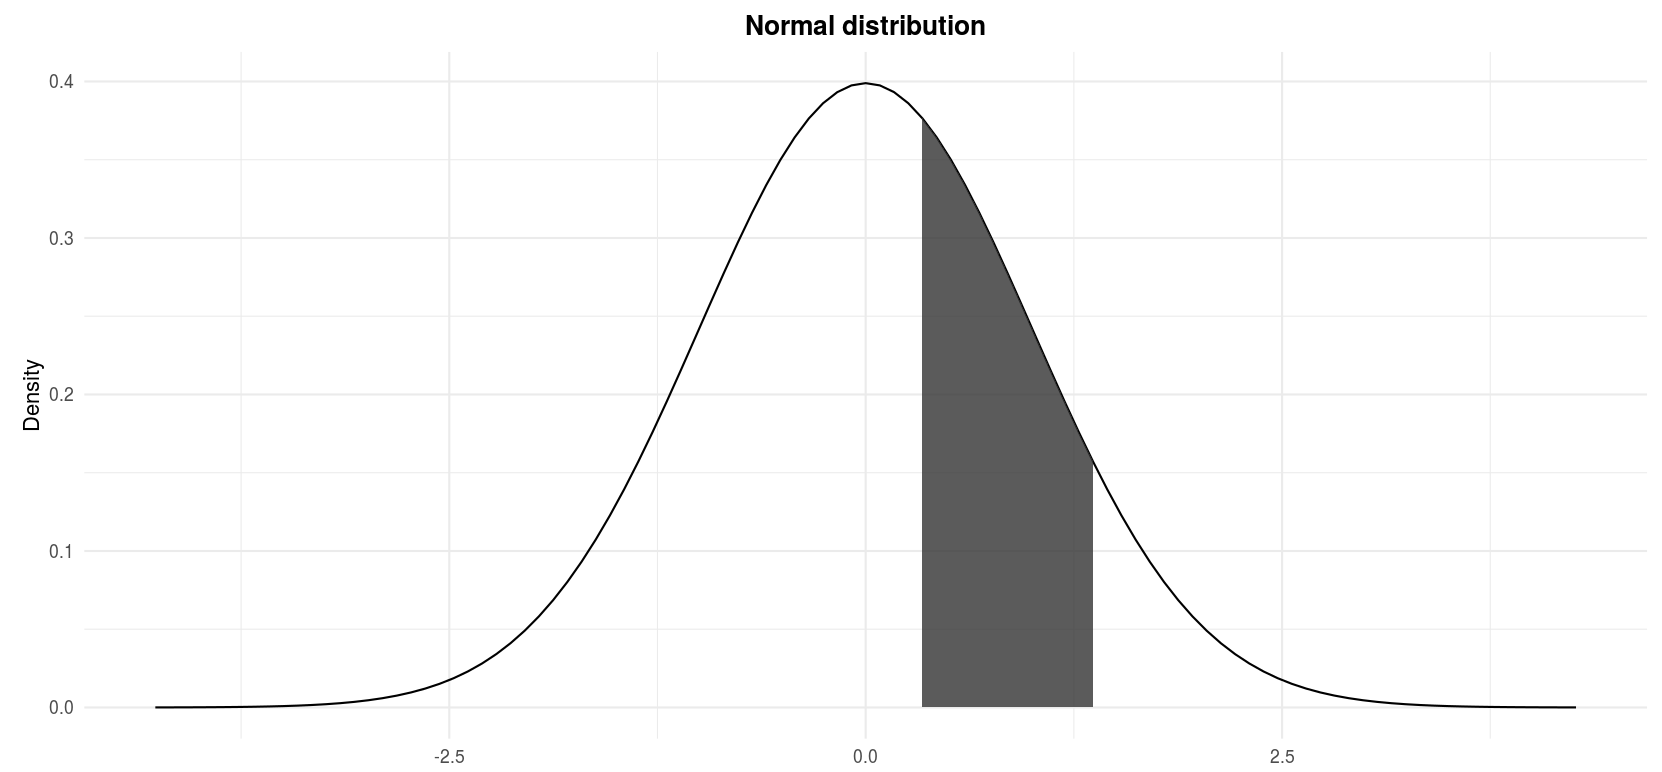 normal distribution percentages for 2000 test